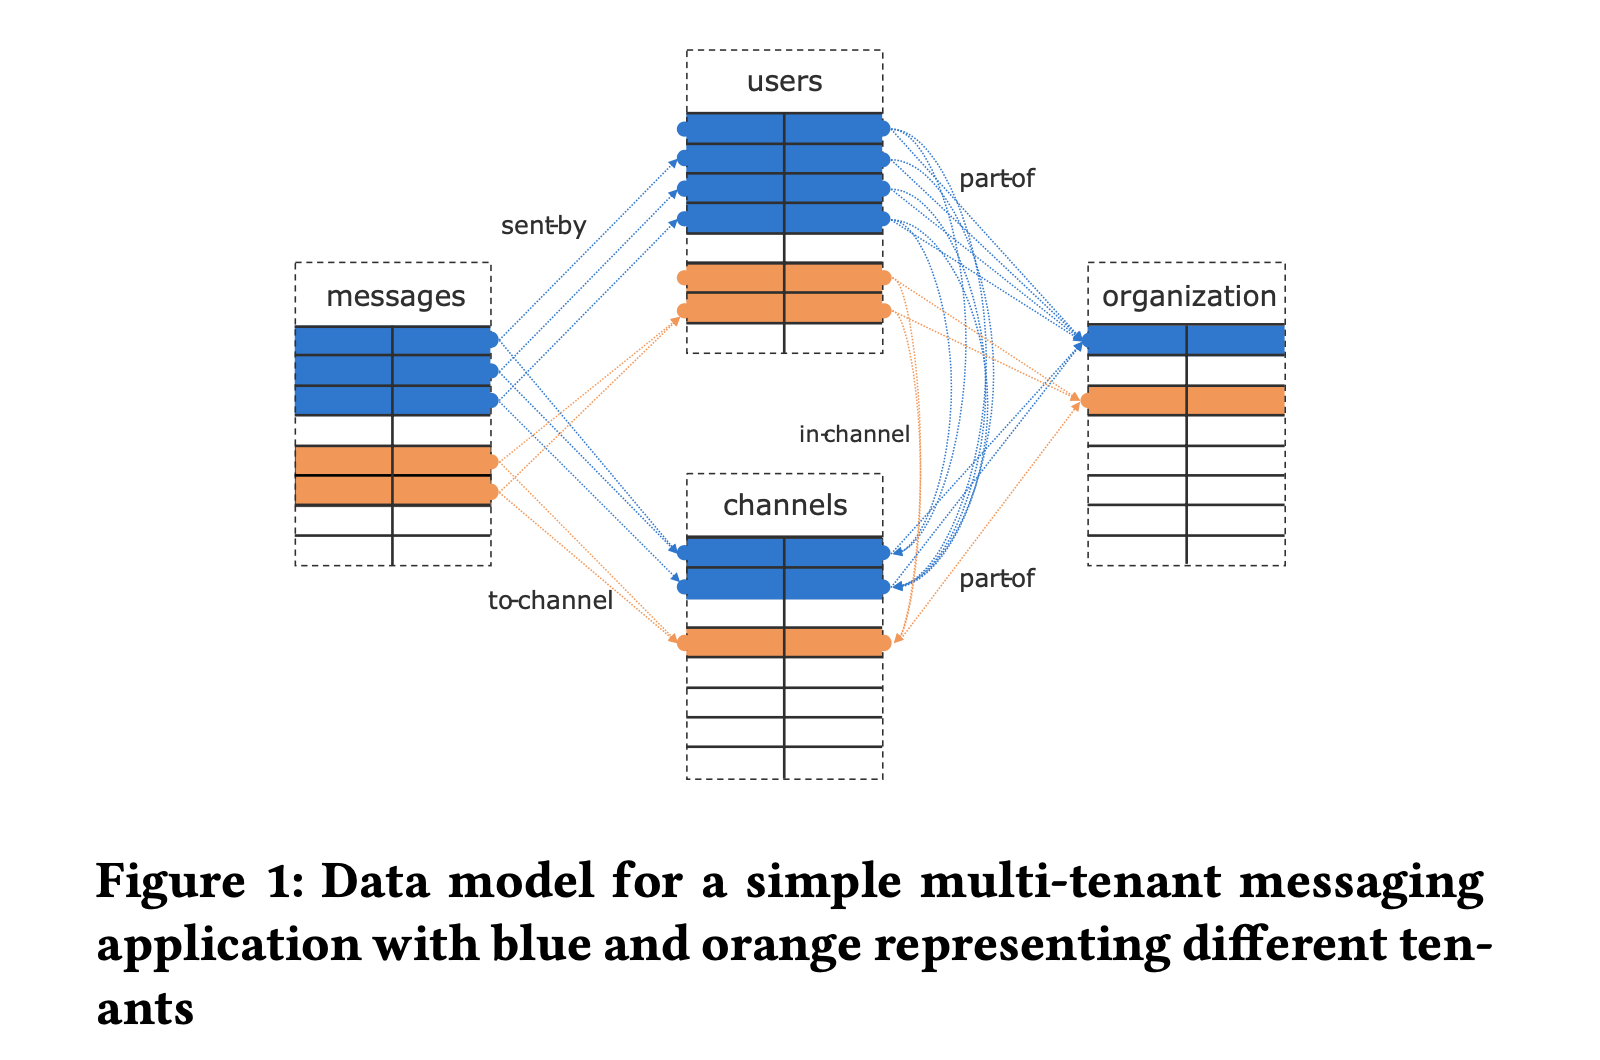 Data Model for simple multi-tenant